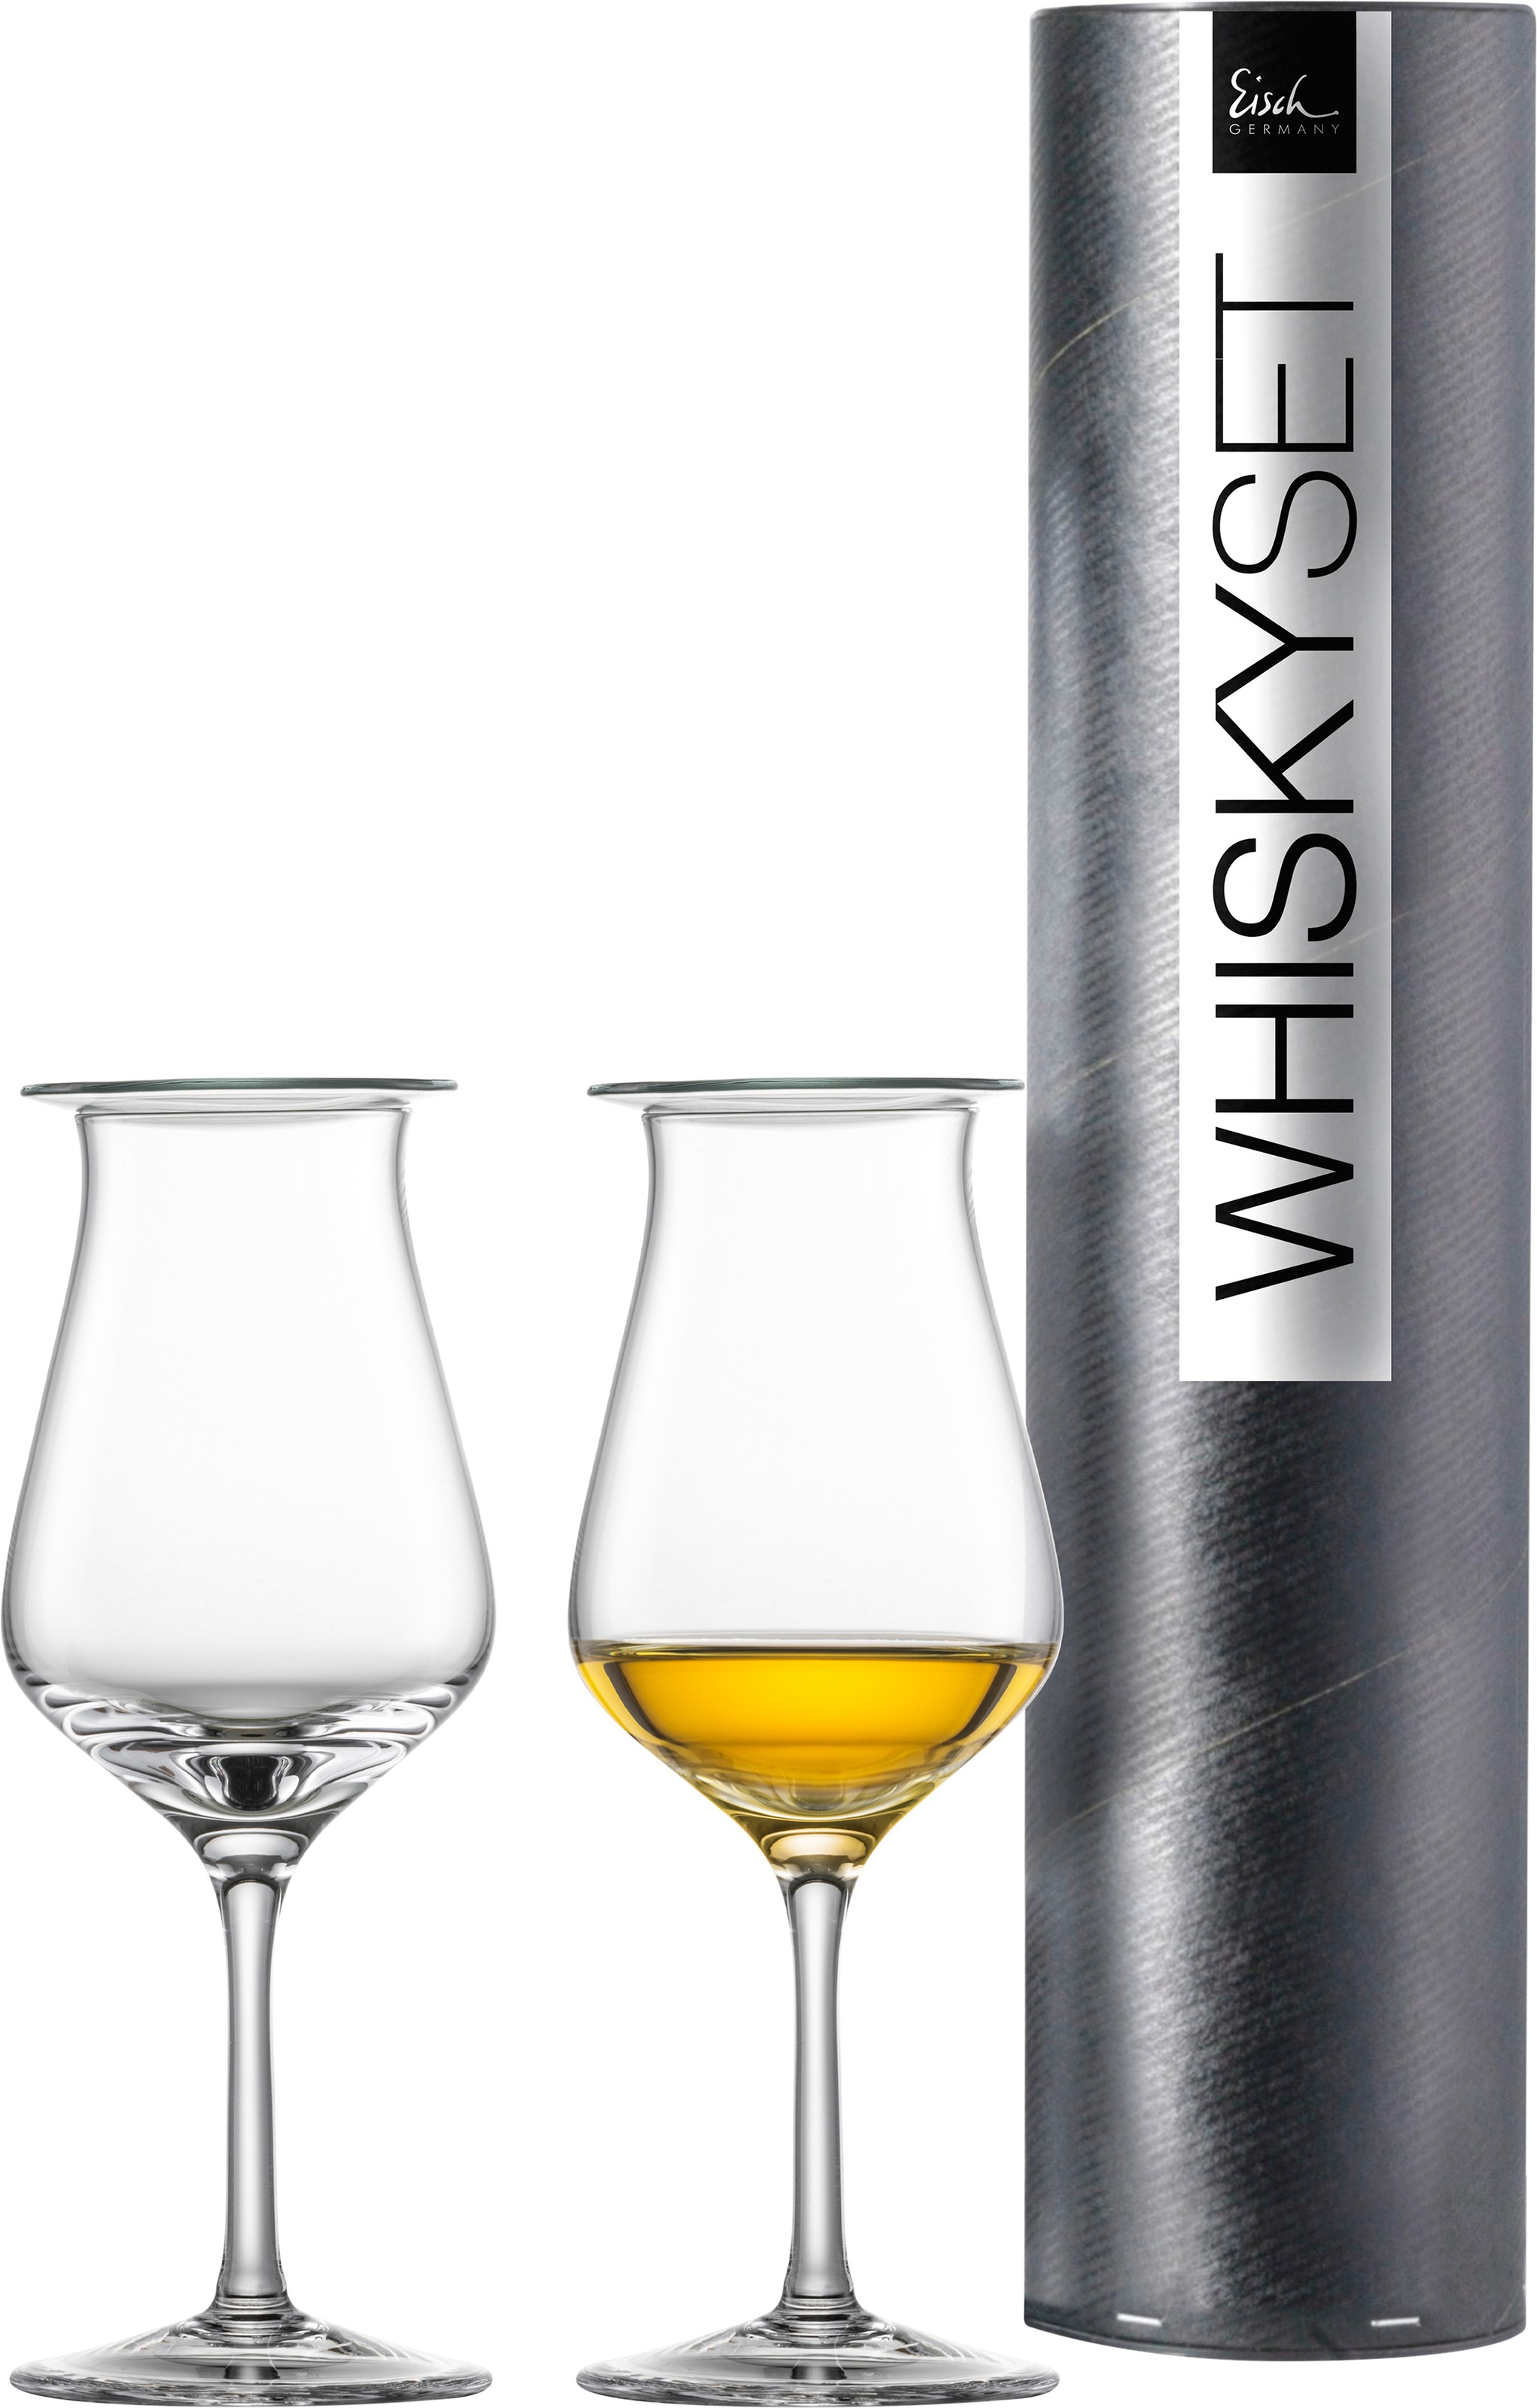 Eisch Whiskyglas »Jeunesse«, (Set, 4 tlg.), bleifrei, 160 ml, 4-teilig